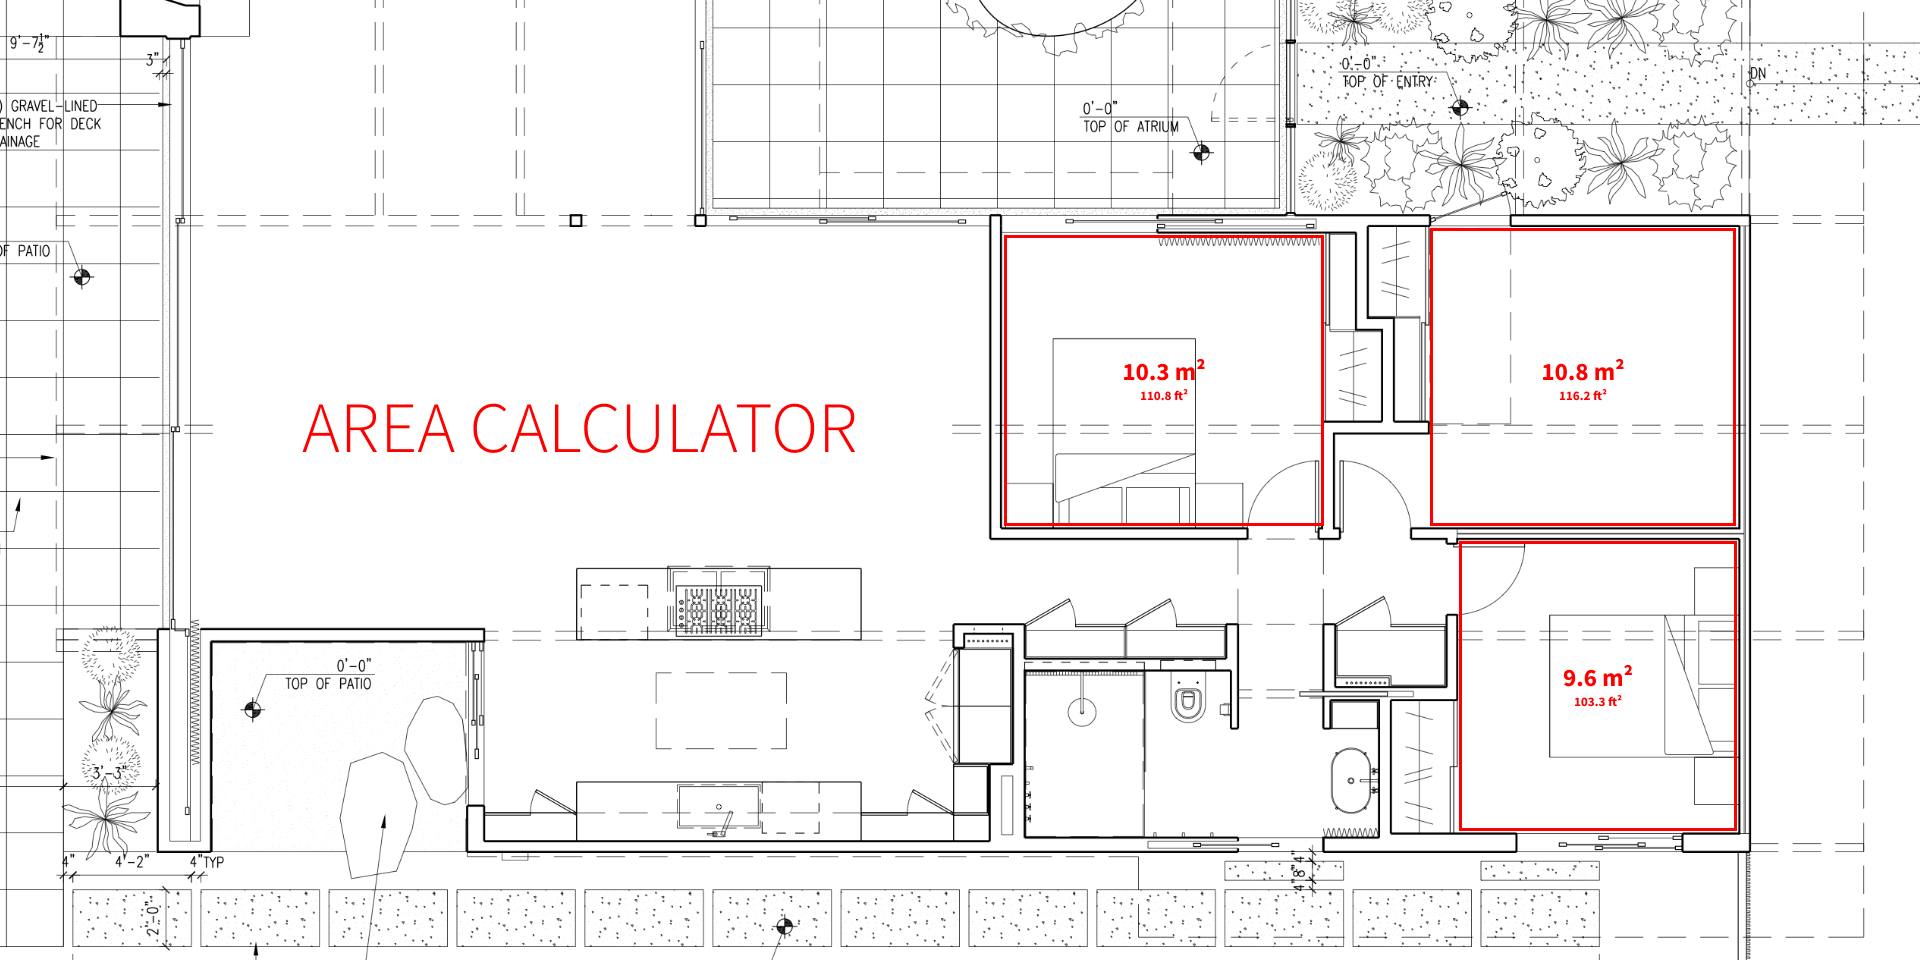 How to Use a Floor Area Calculator